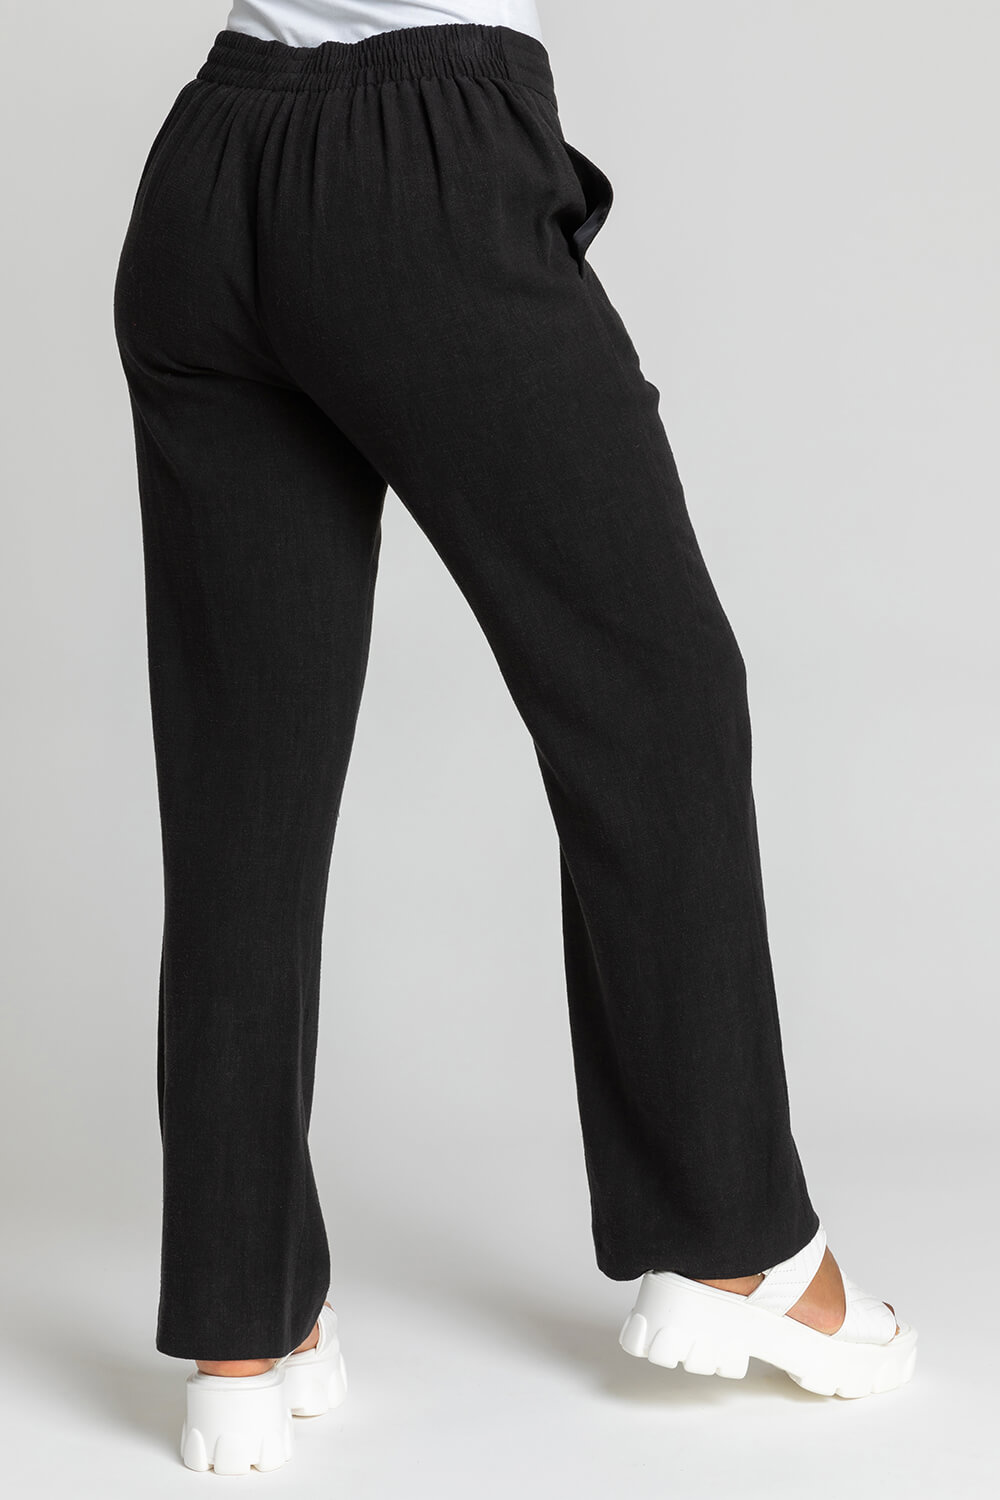 Black Petite Linen Tie Front Trousers, Image 3 of 4